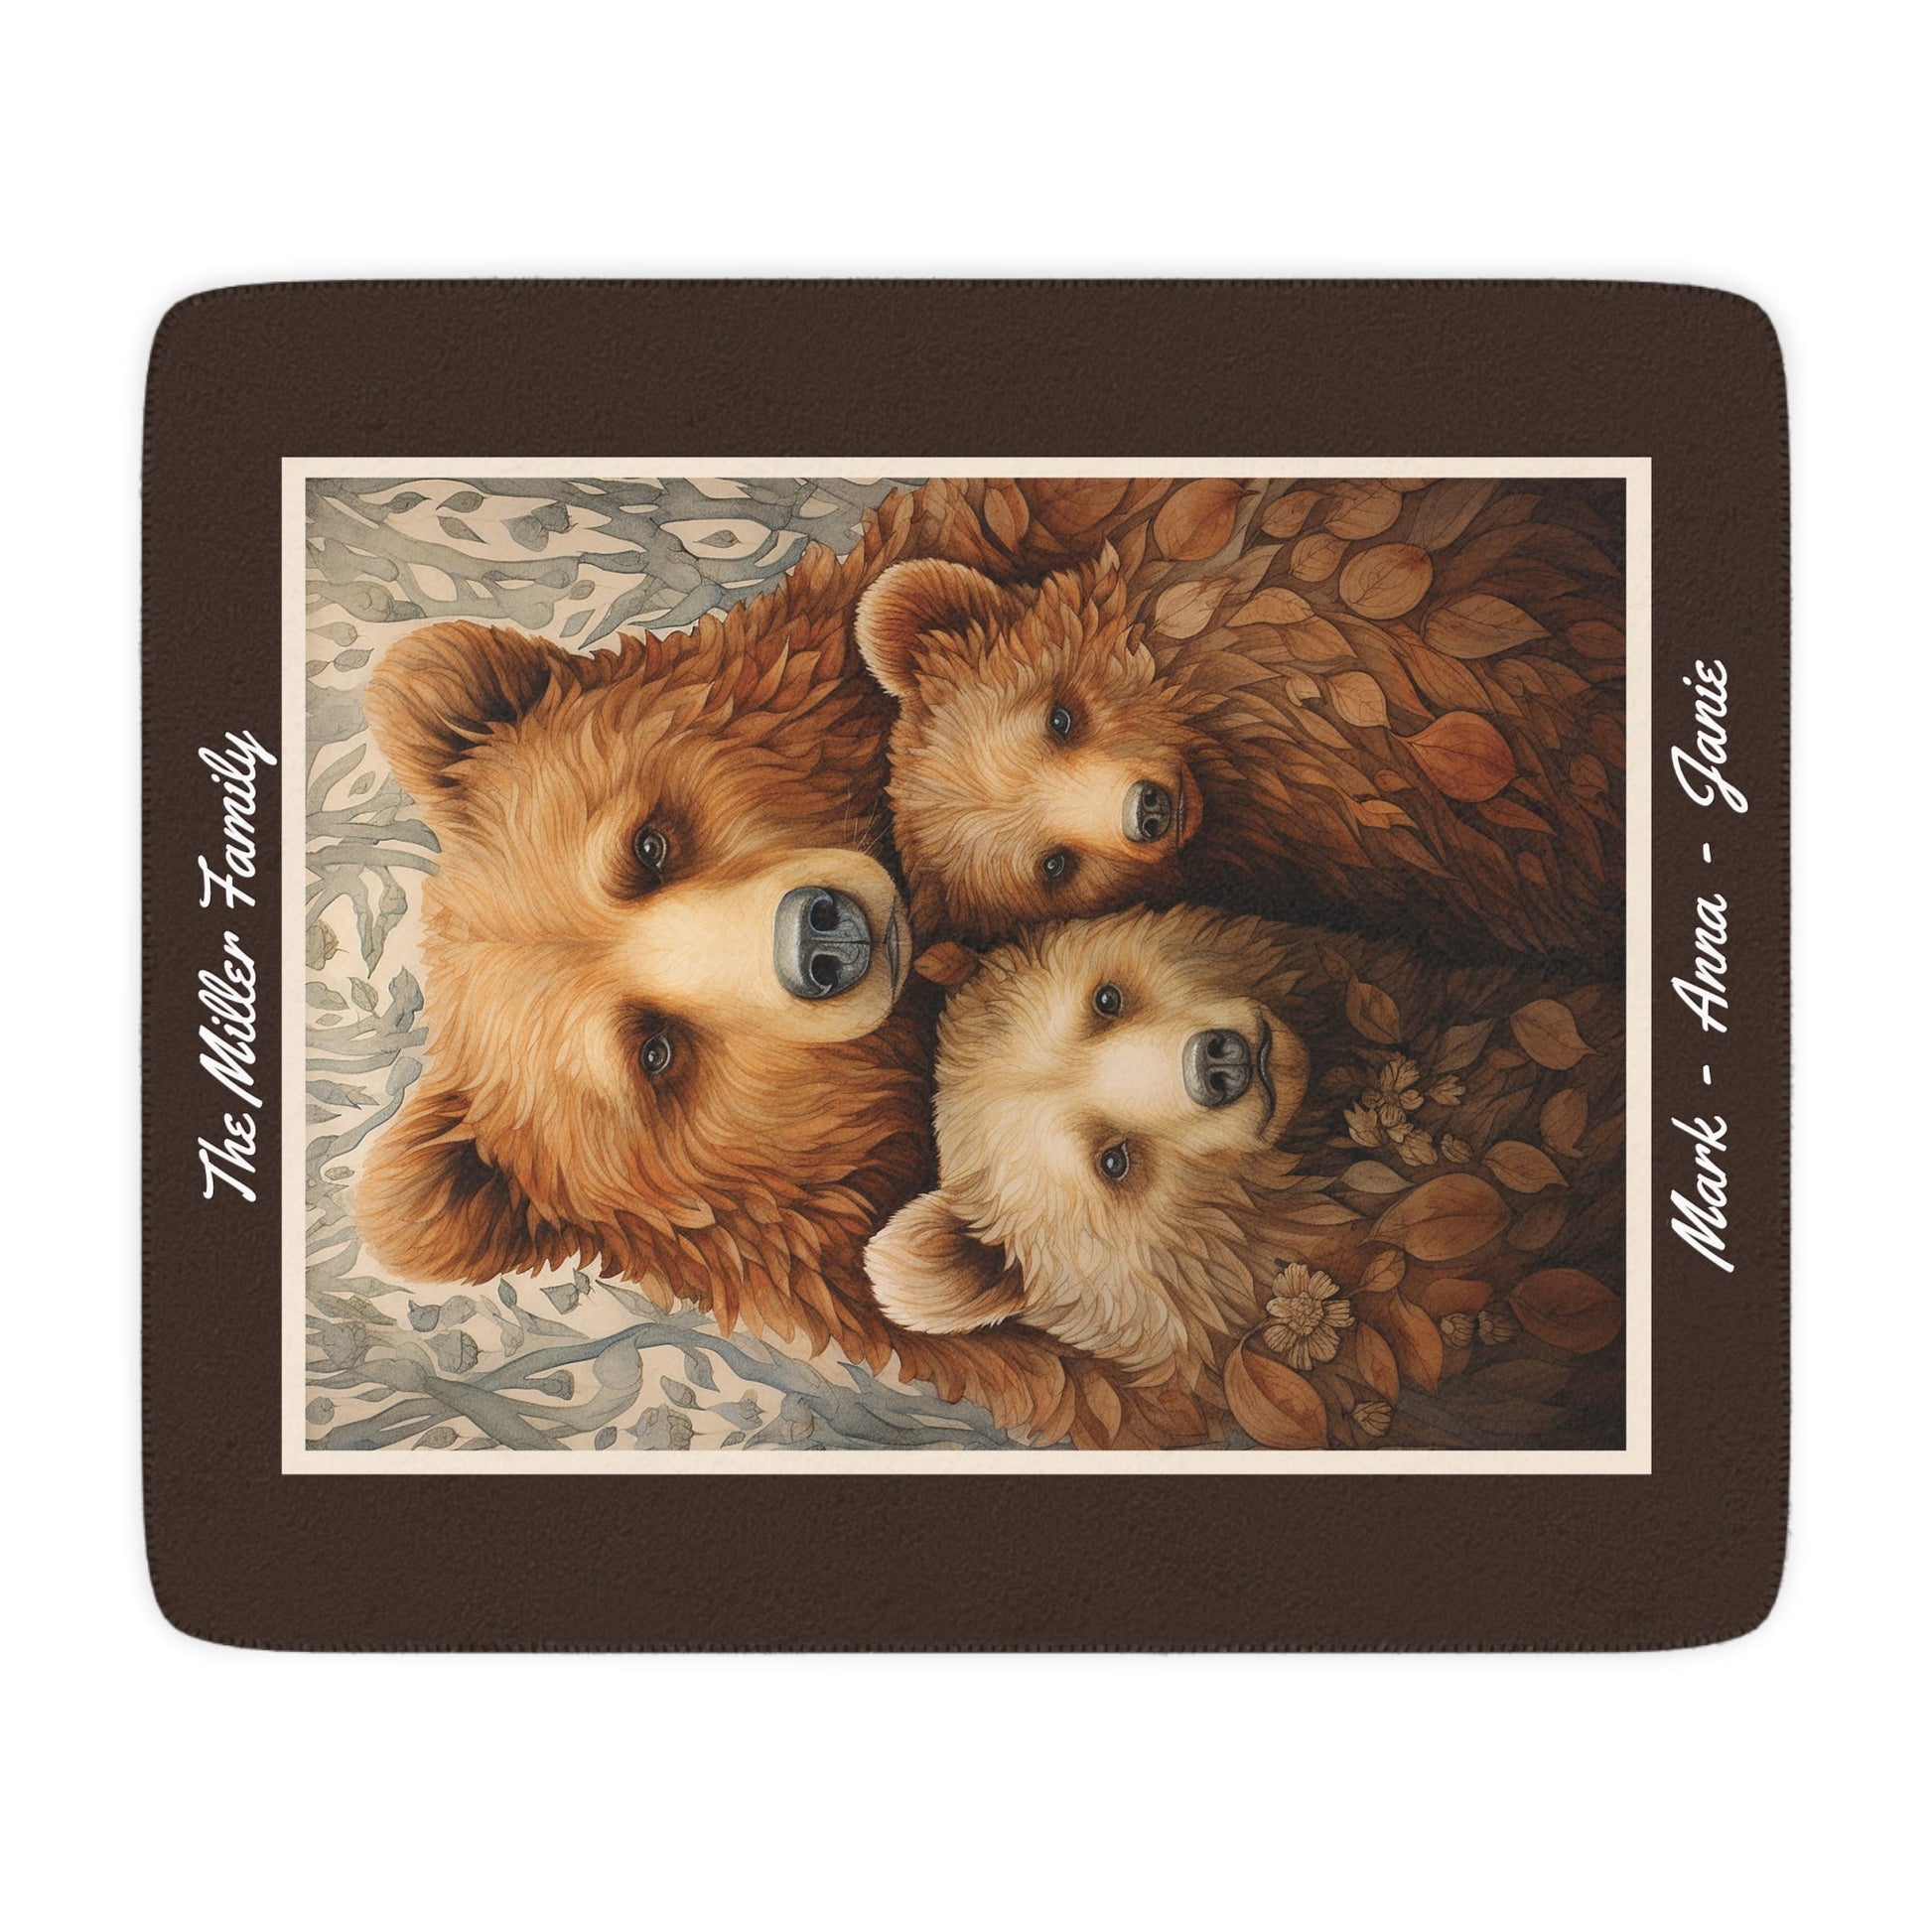 Family of Bears Throw Blanket, Personalized Family Throw Coverlet, Customized Named - FlooredByArt